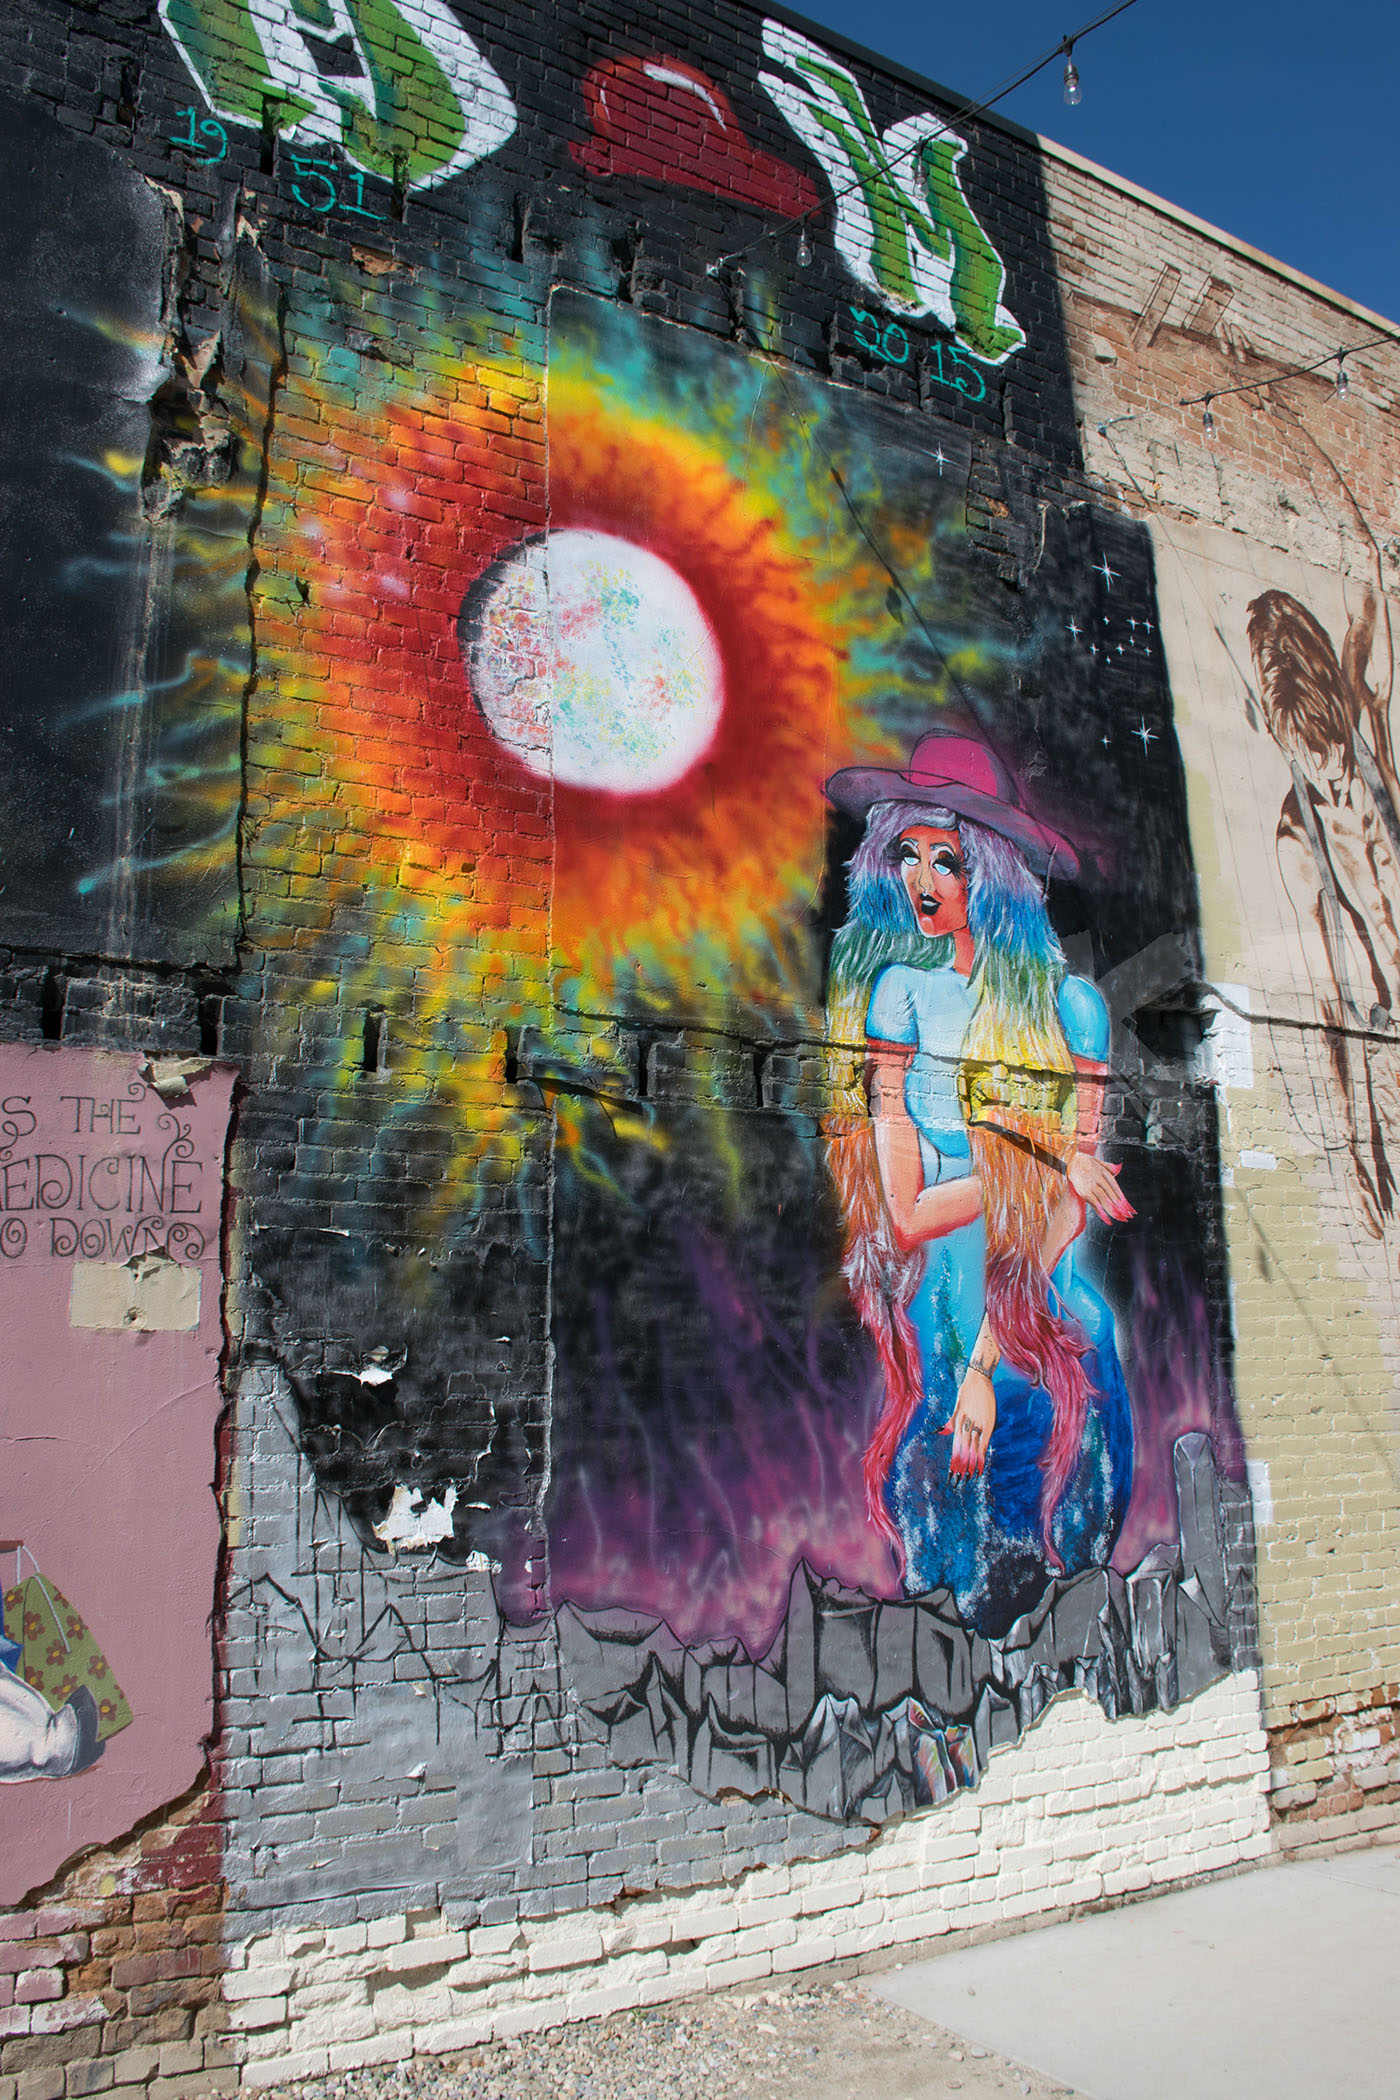 Graffiti boise Idaho freak alley art